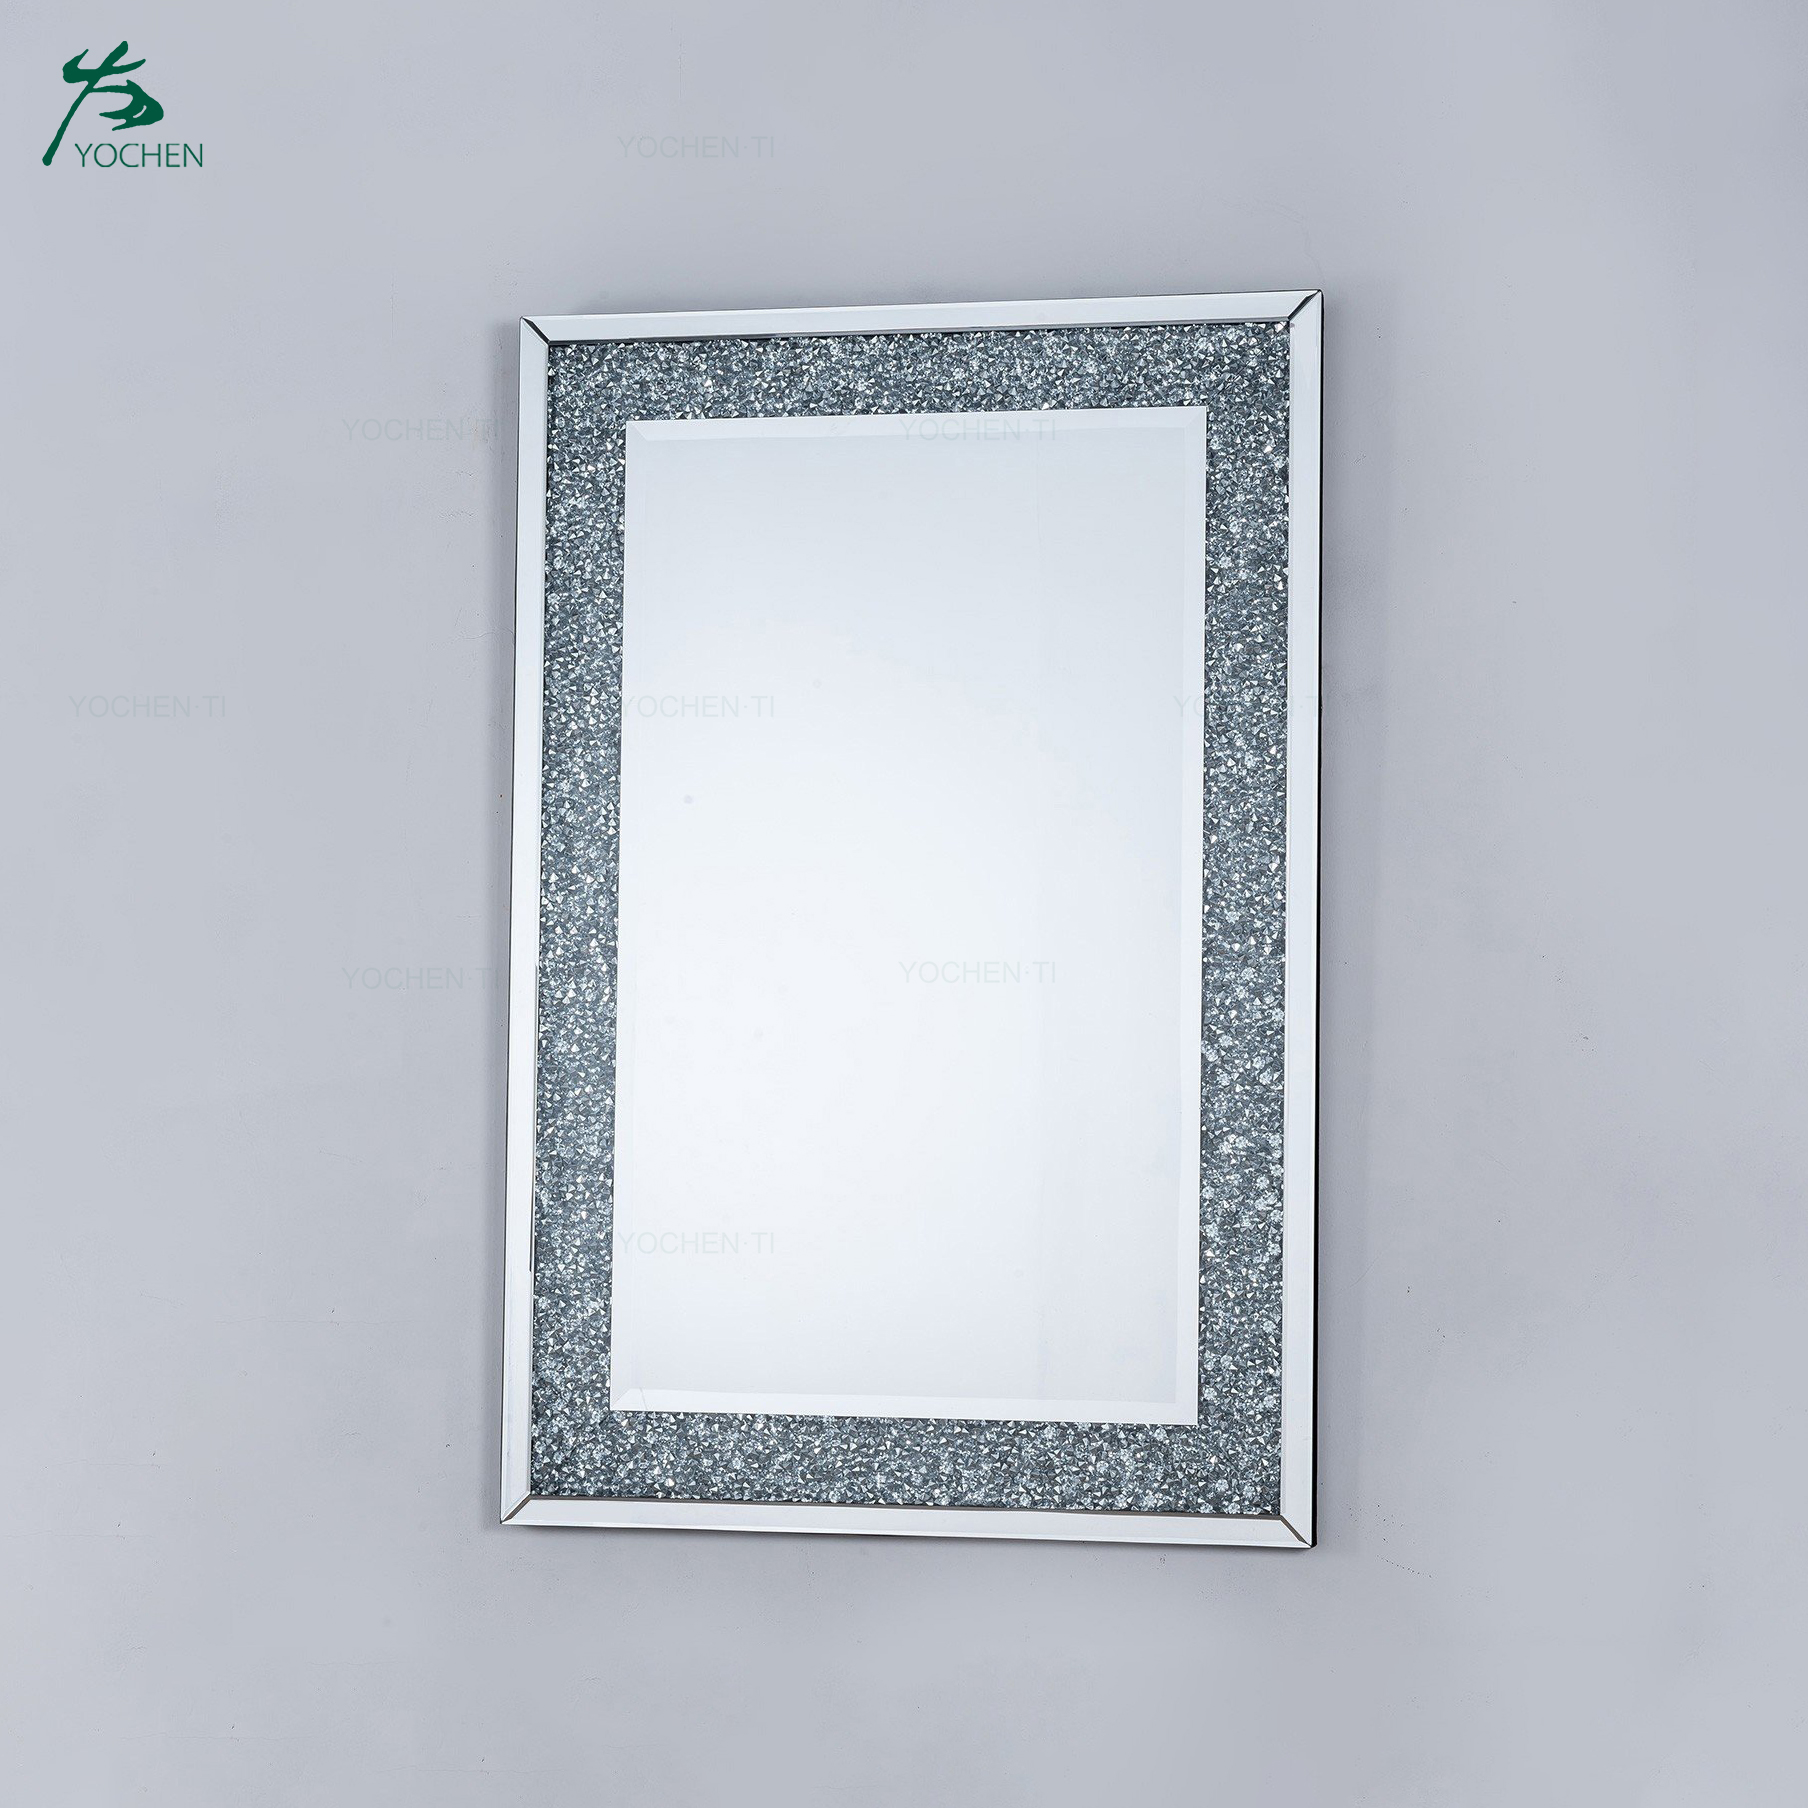 Diamond crush mirrored venetian glass large floor leaner mirror